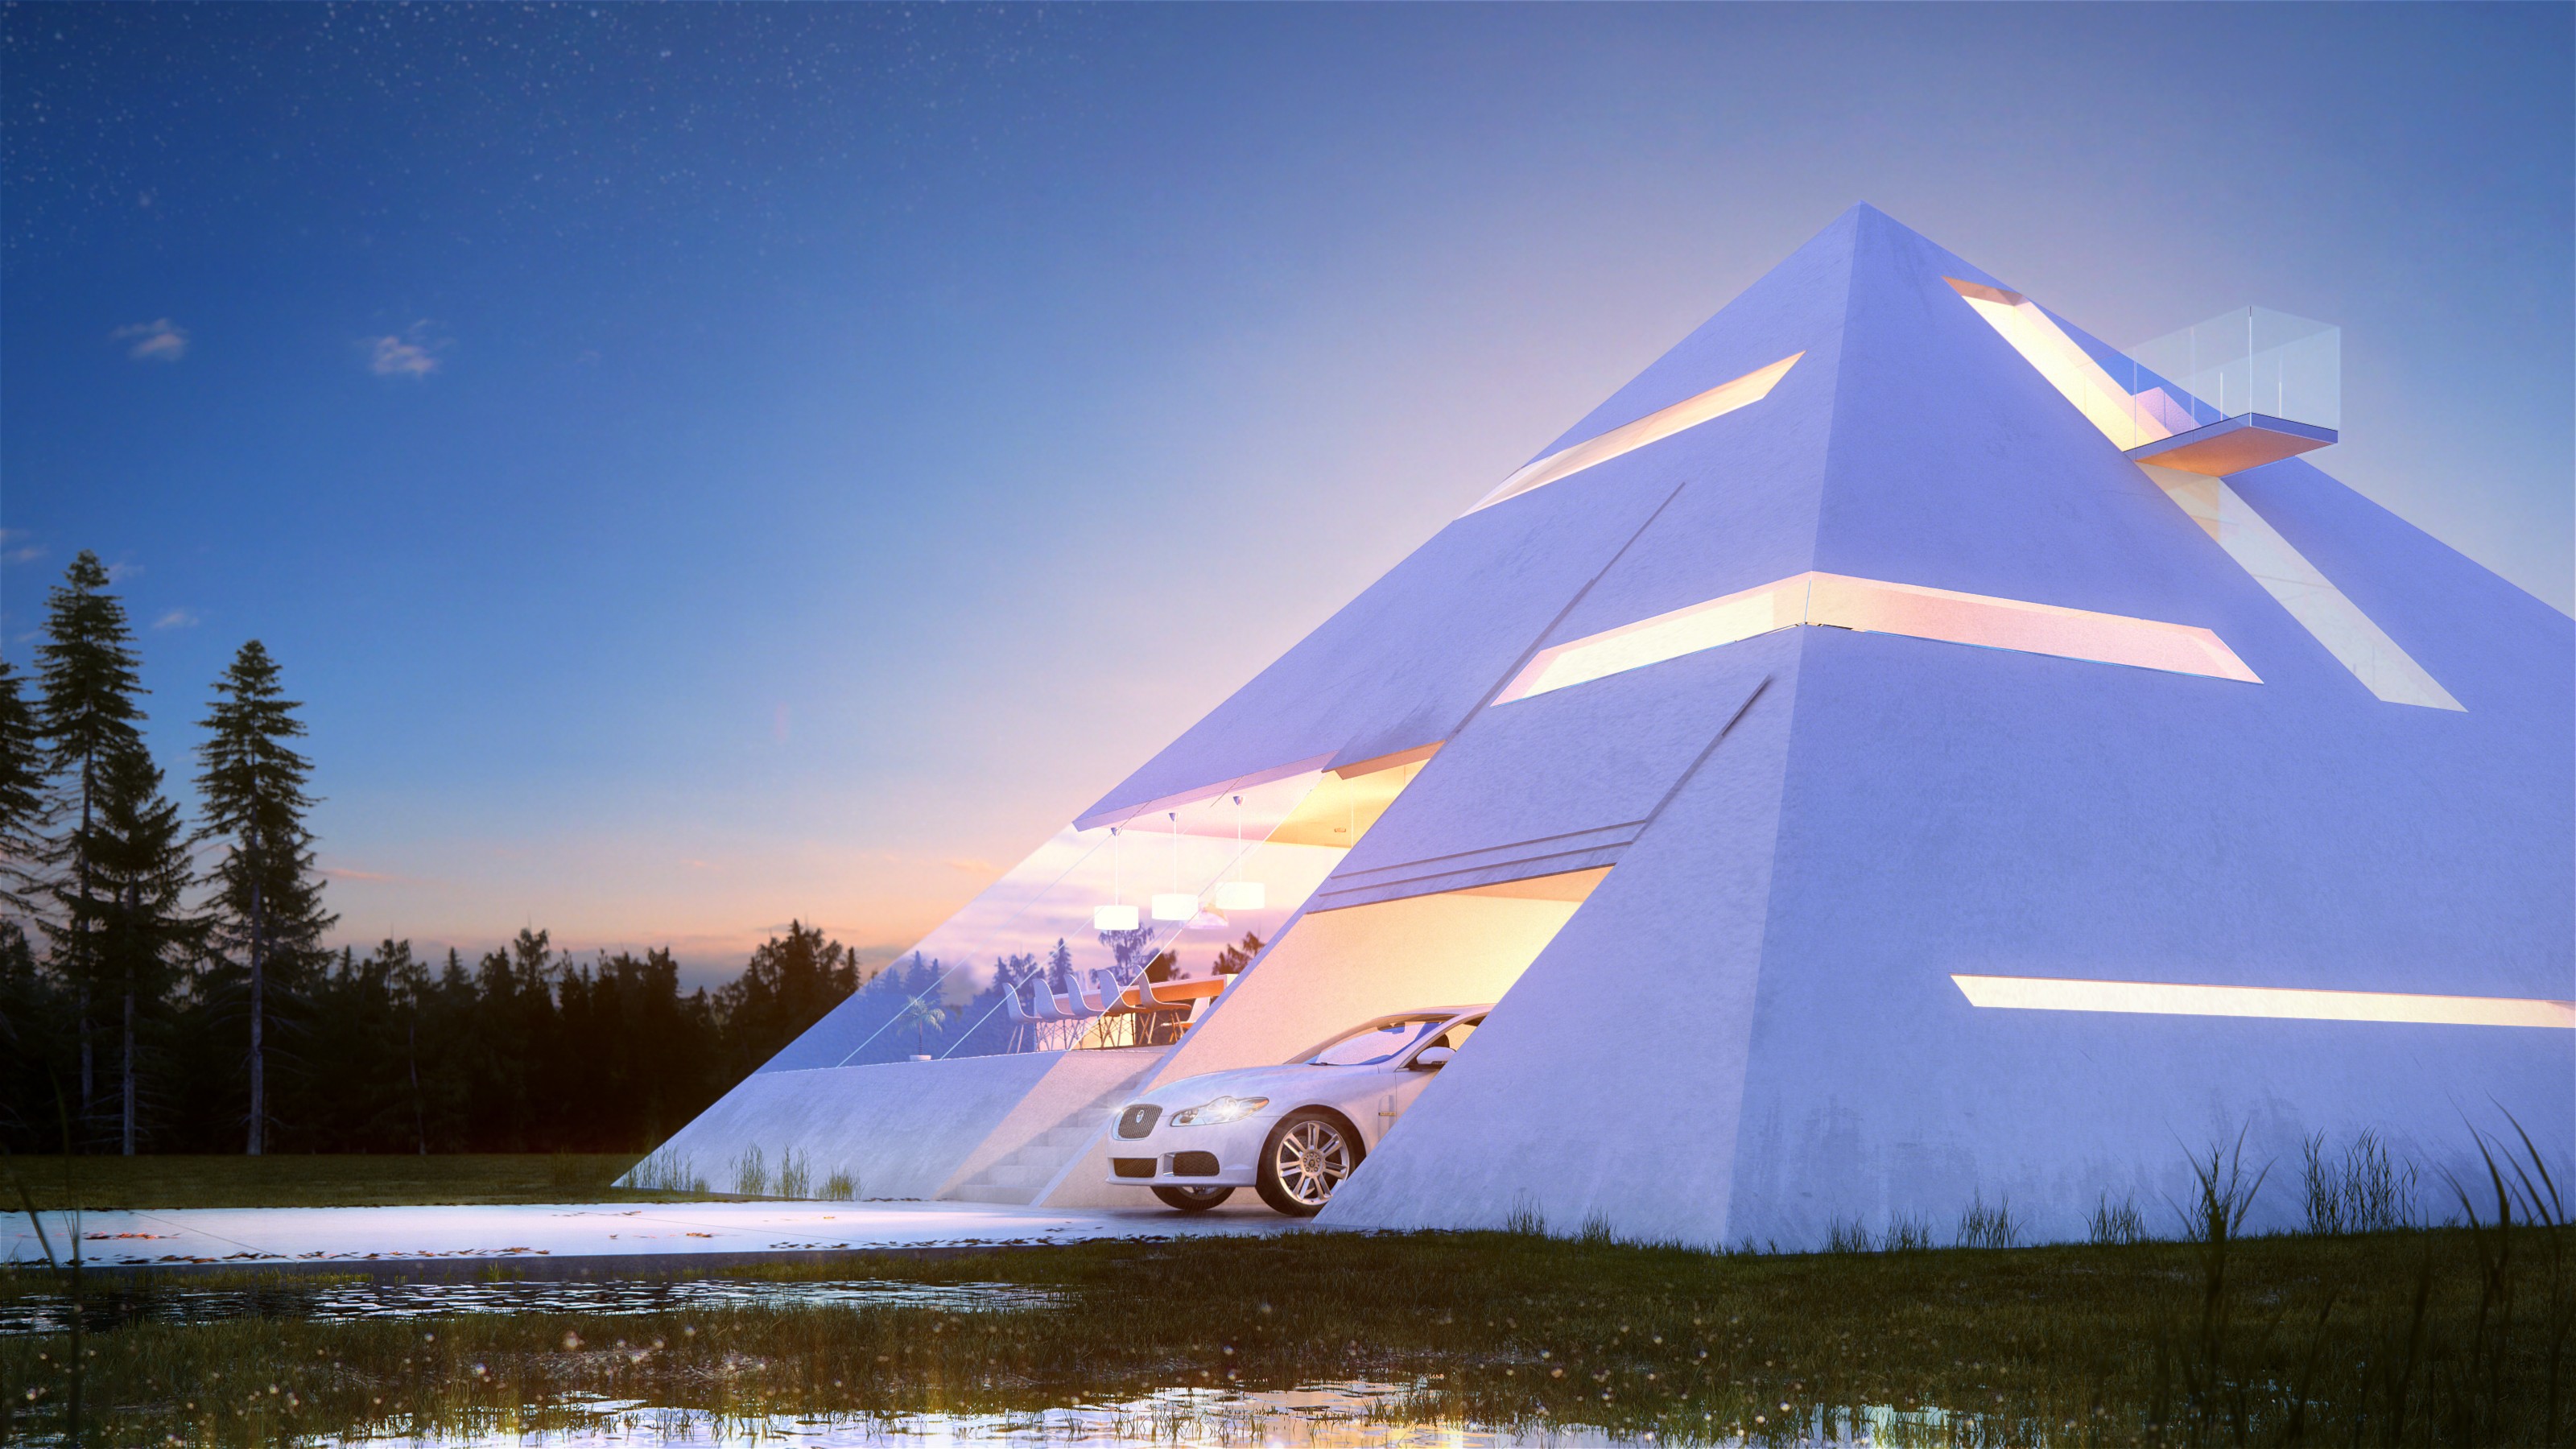 Futuristic Pyramid House Design Designs & Ideas on Dornob